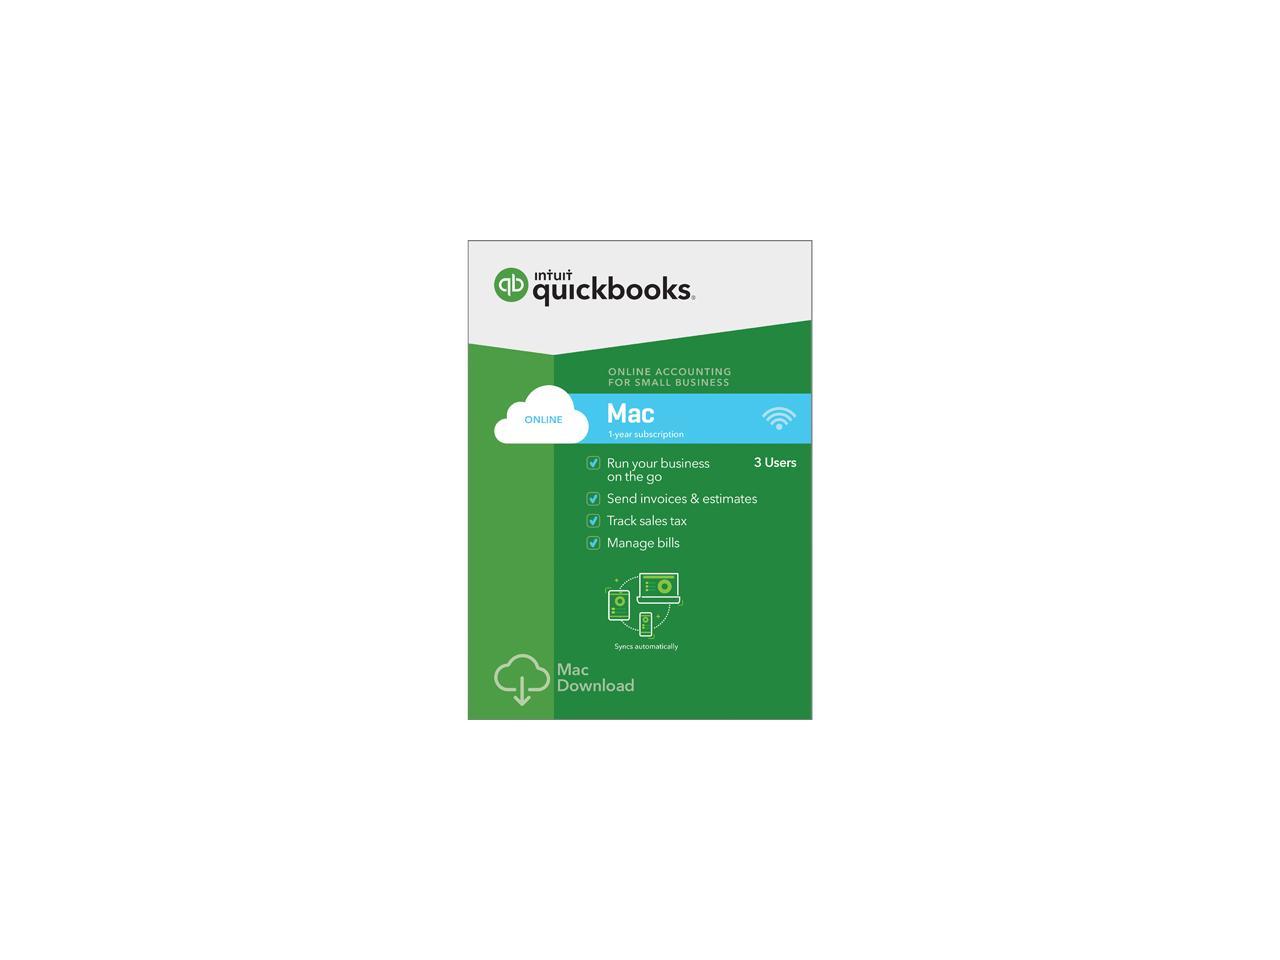 download quickbooks for mac 2019